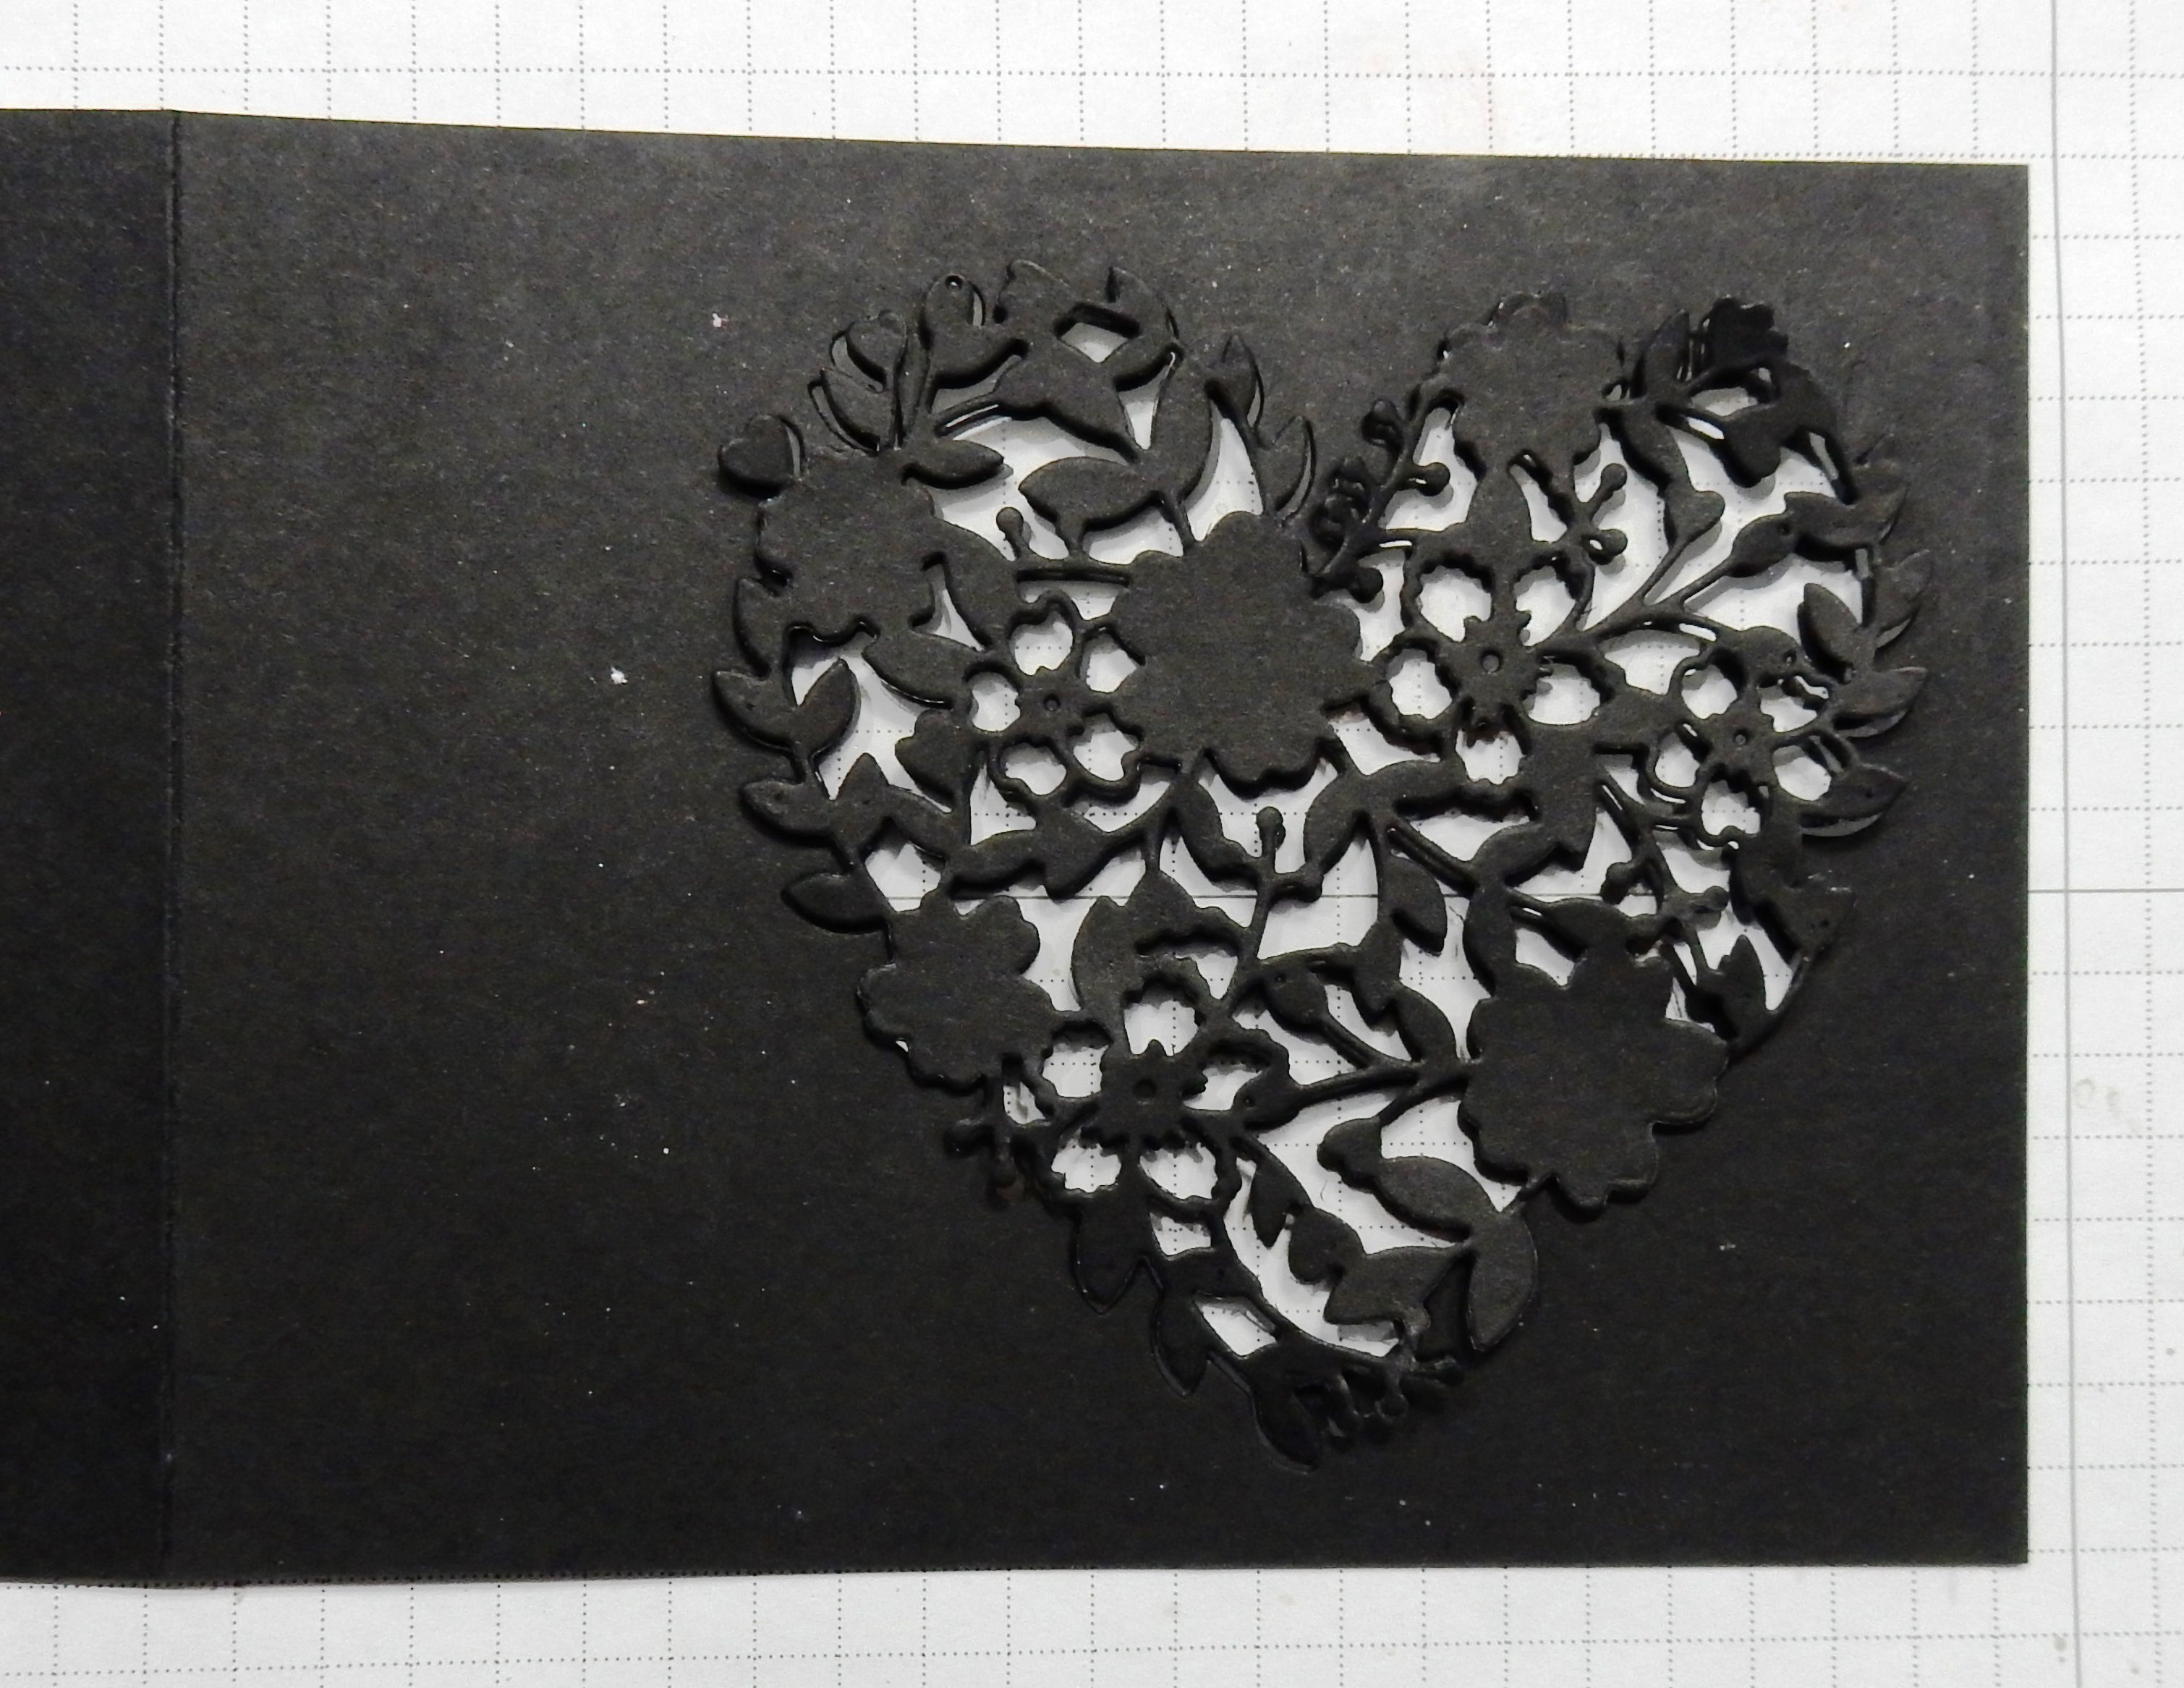 Bloomin Love Valentine by Wendy Lee, Stampin Up, #creativeleeyours, hand made valentine card